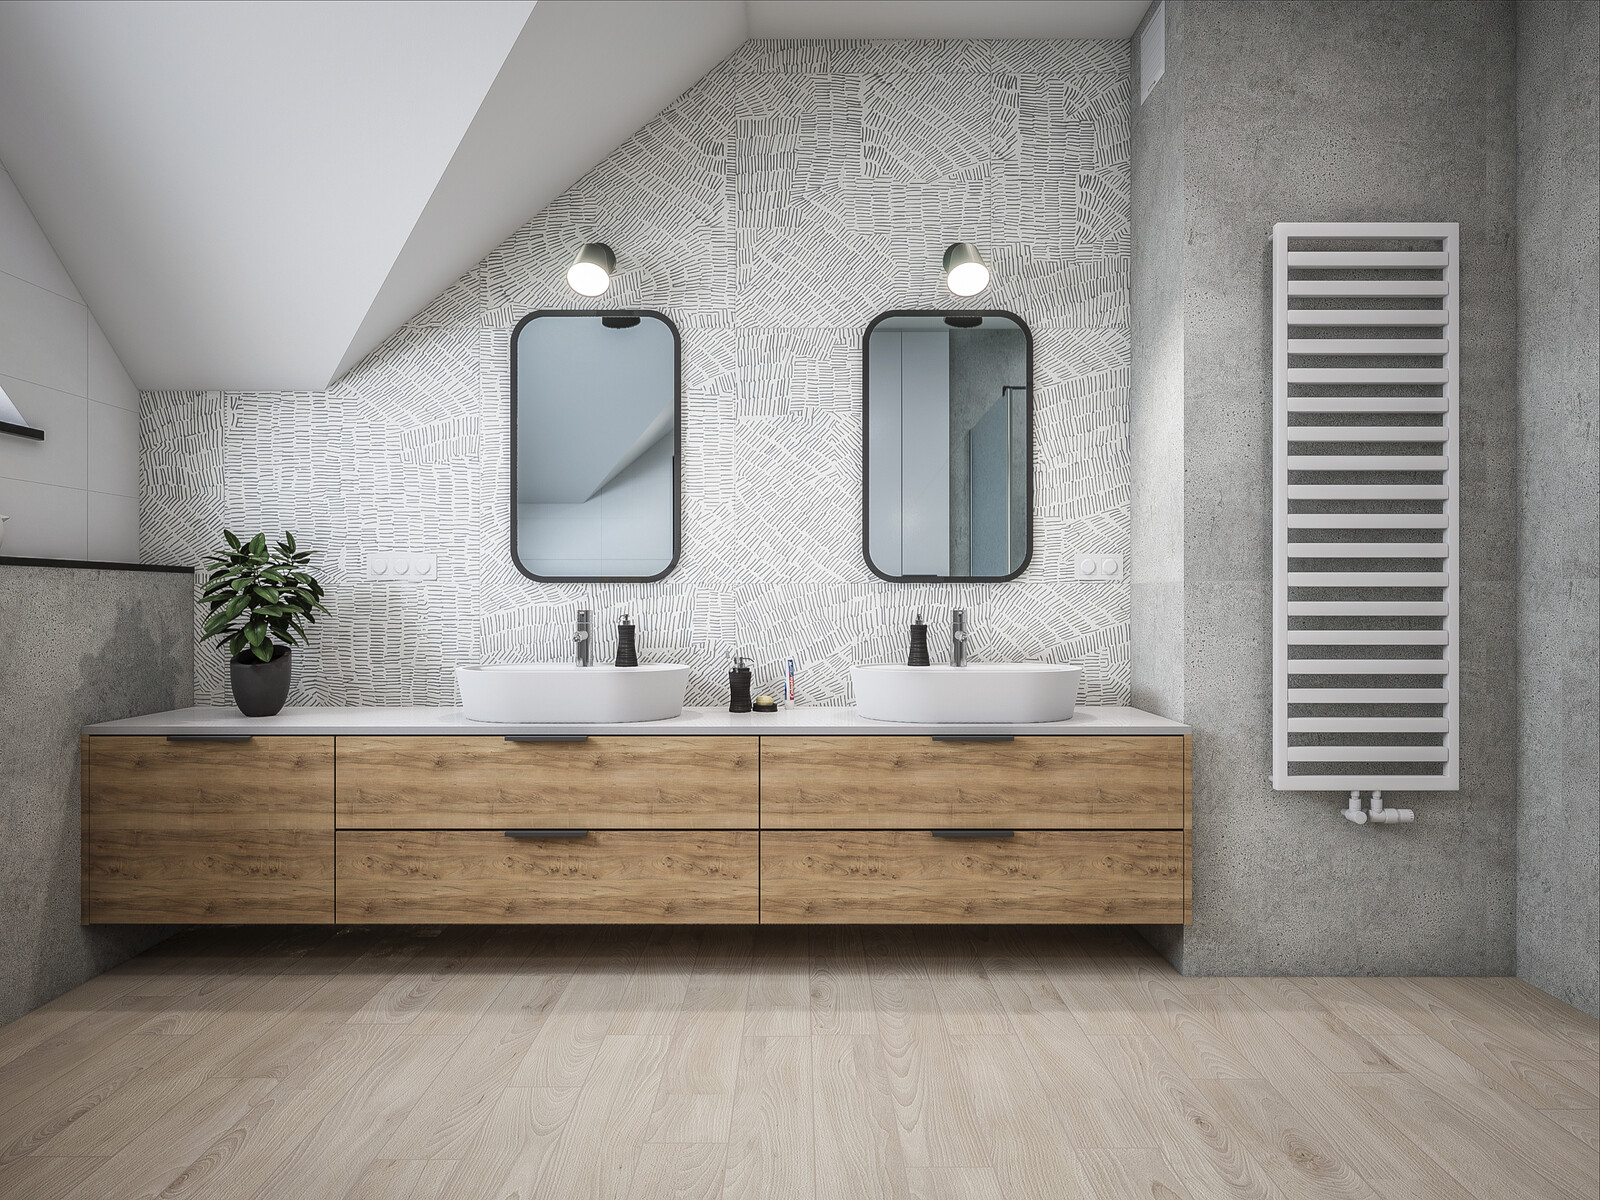 Bathroom - Interior Archviz / UE4 - Unreal Engine